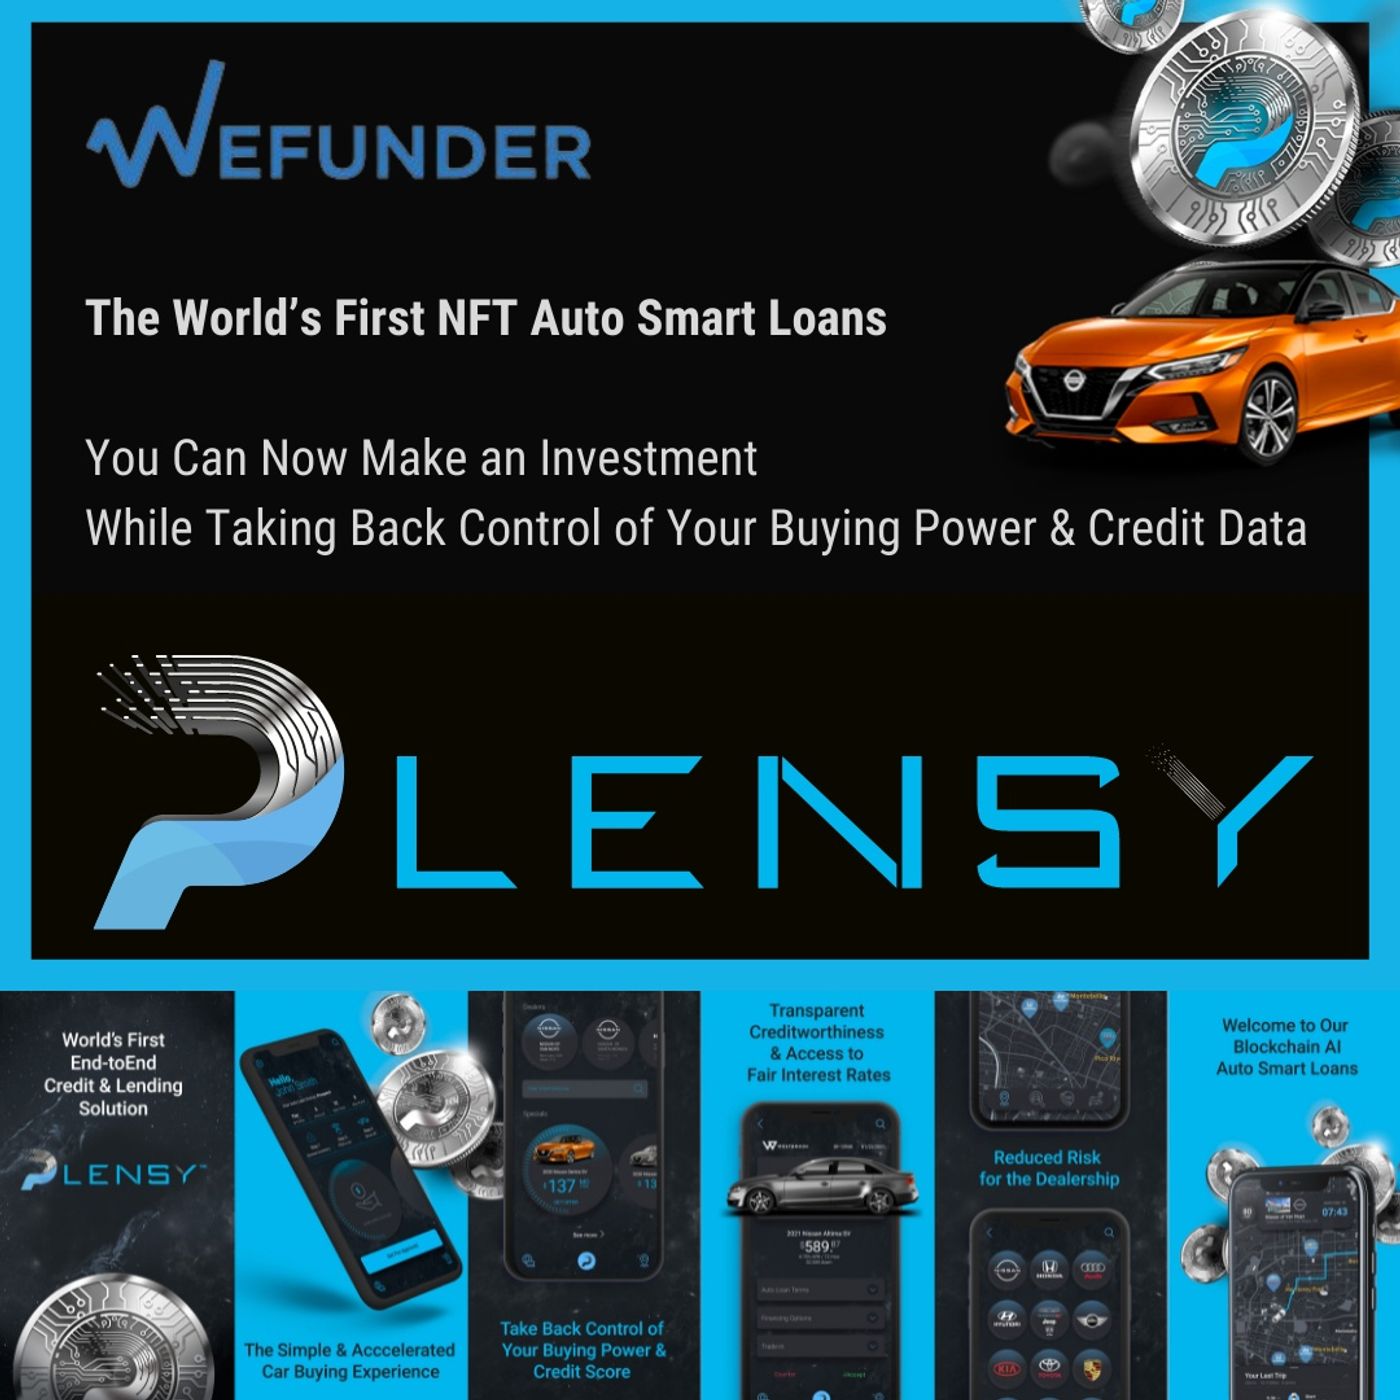 Plensy™, The World’s First NFT